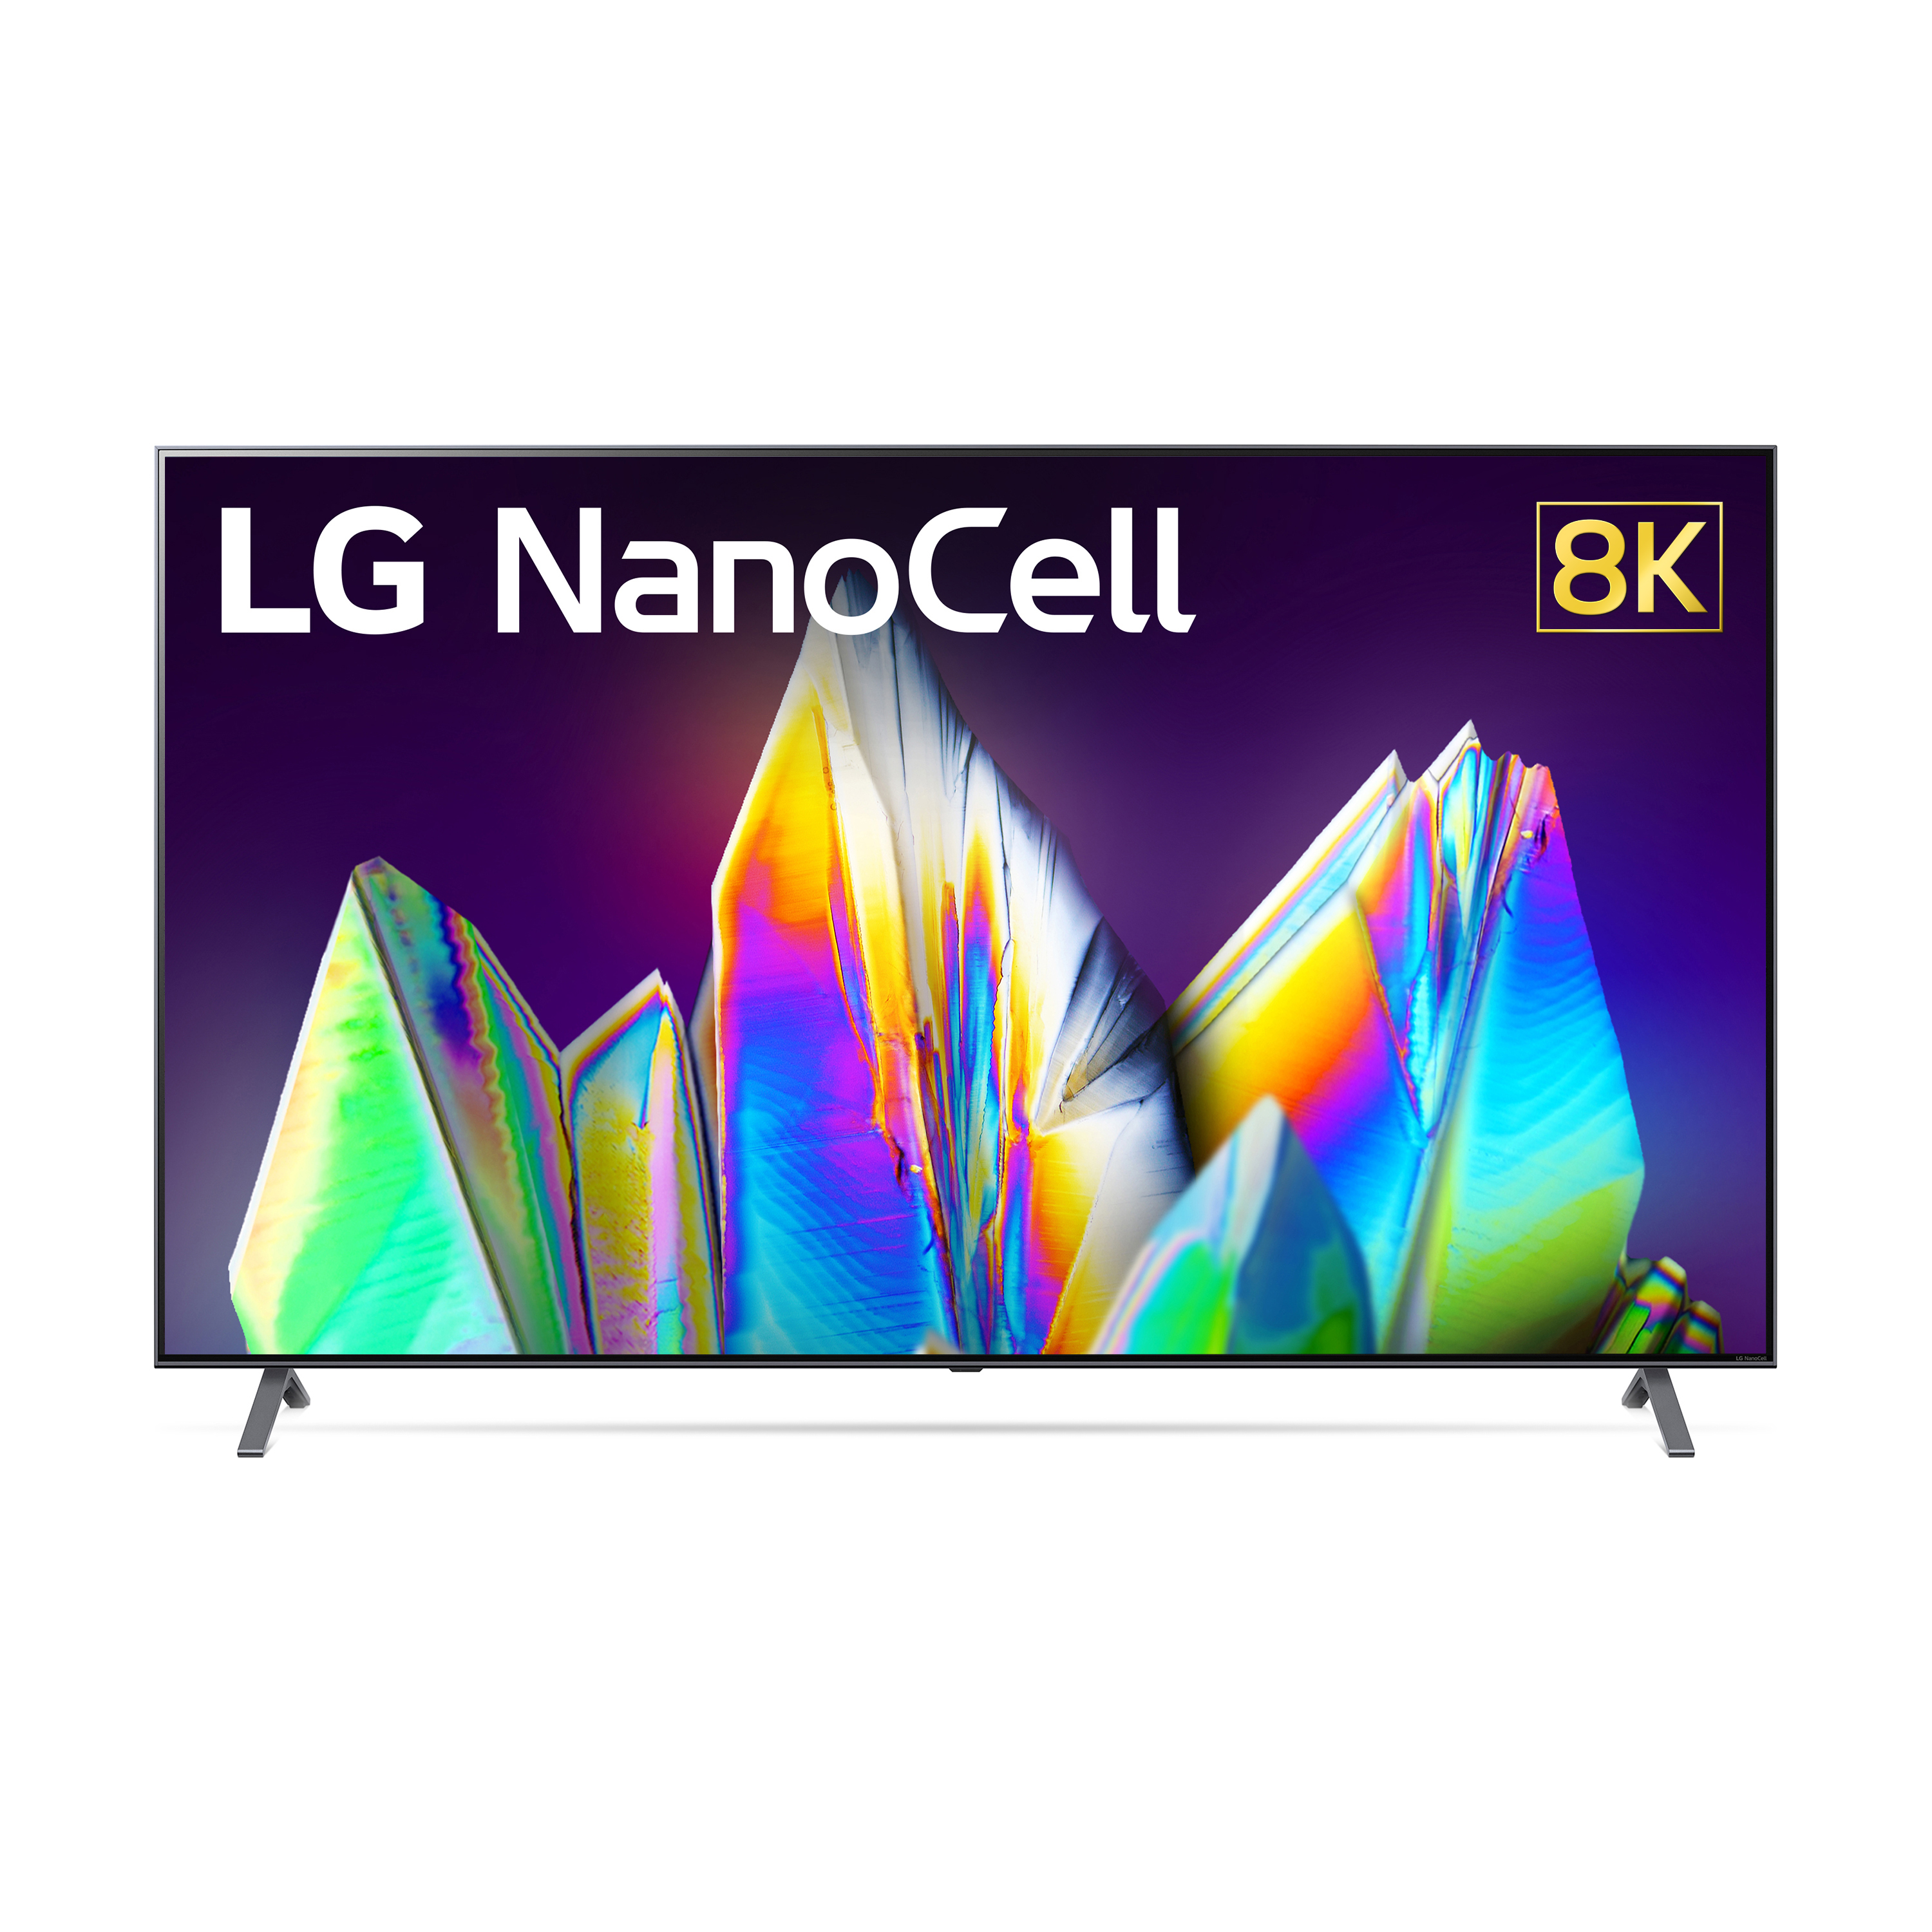 LG 75" Class 8K UHD 4320P NanoCell Smart TV with HDR 75NANO99UNA 2020 Model - image 1 of 39